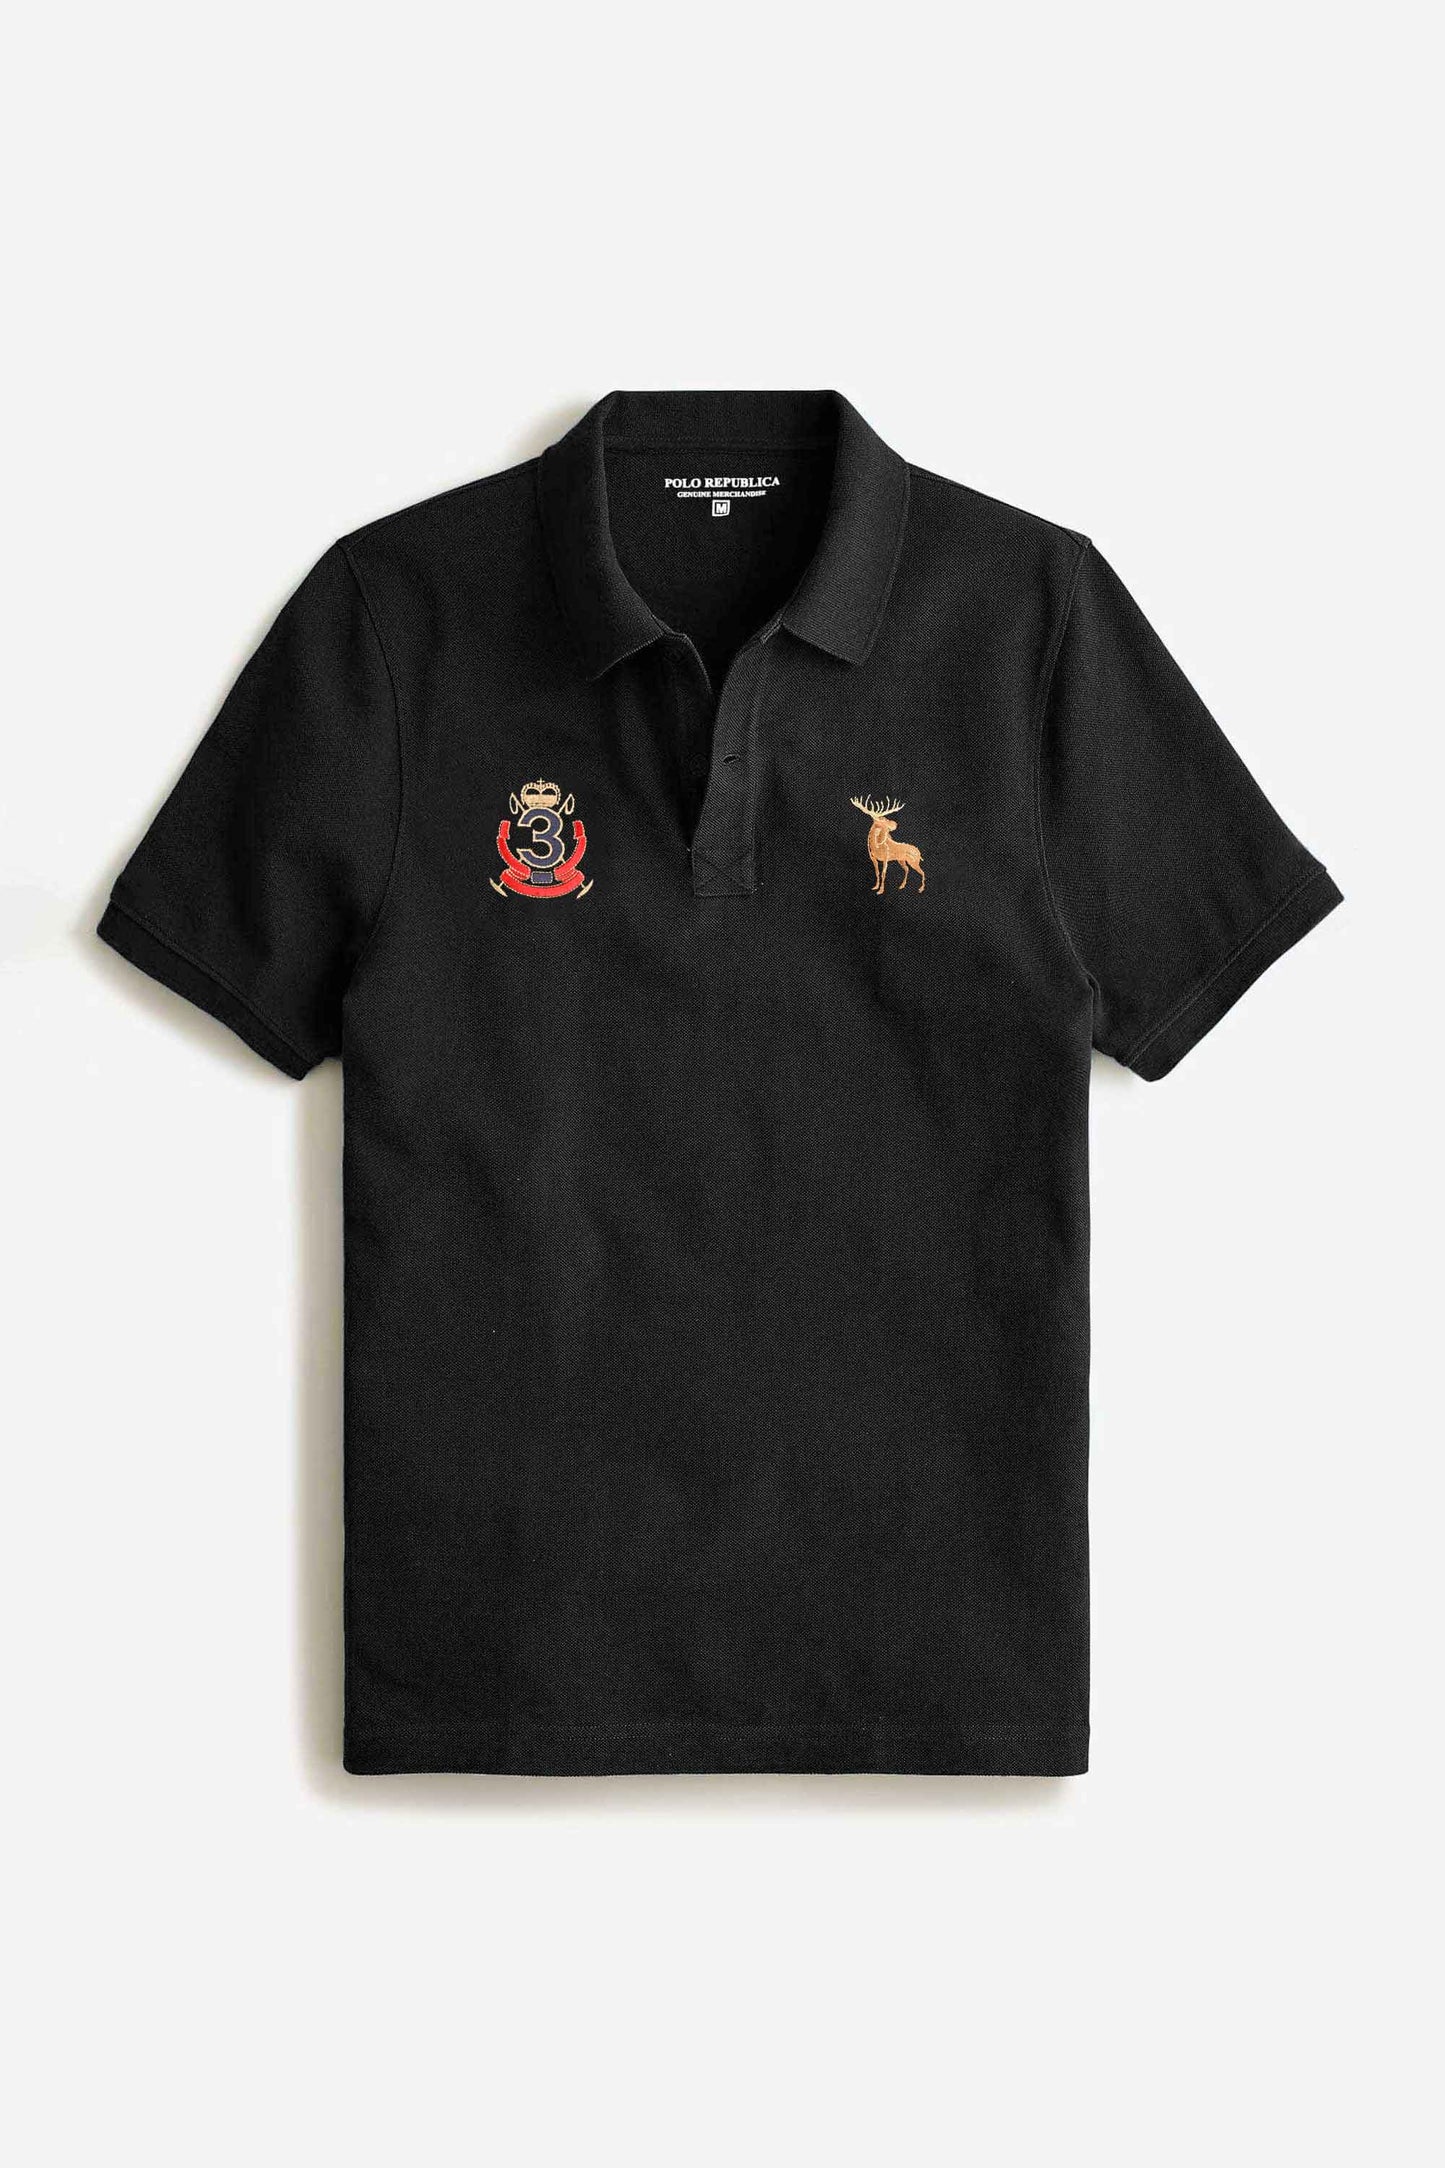 Polo Republica Men's Moose & Crest 3 Embroidered Short Sleeve Polo Shirt Men's Polo Shirt Polo Republica 